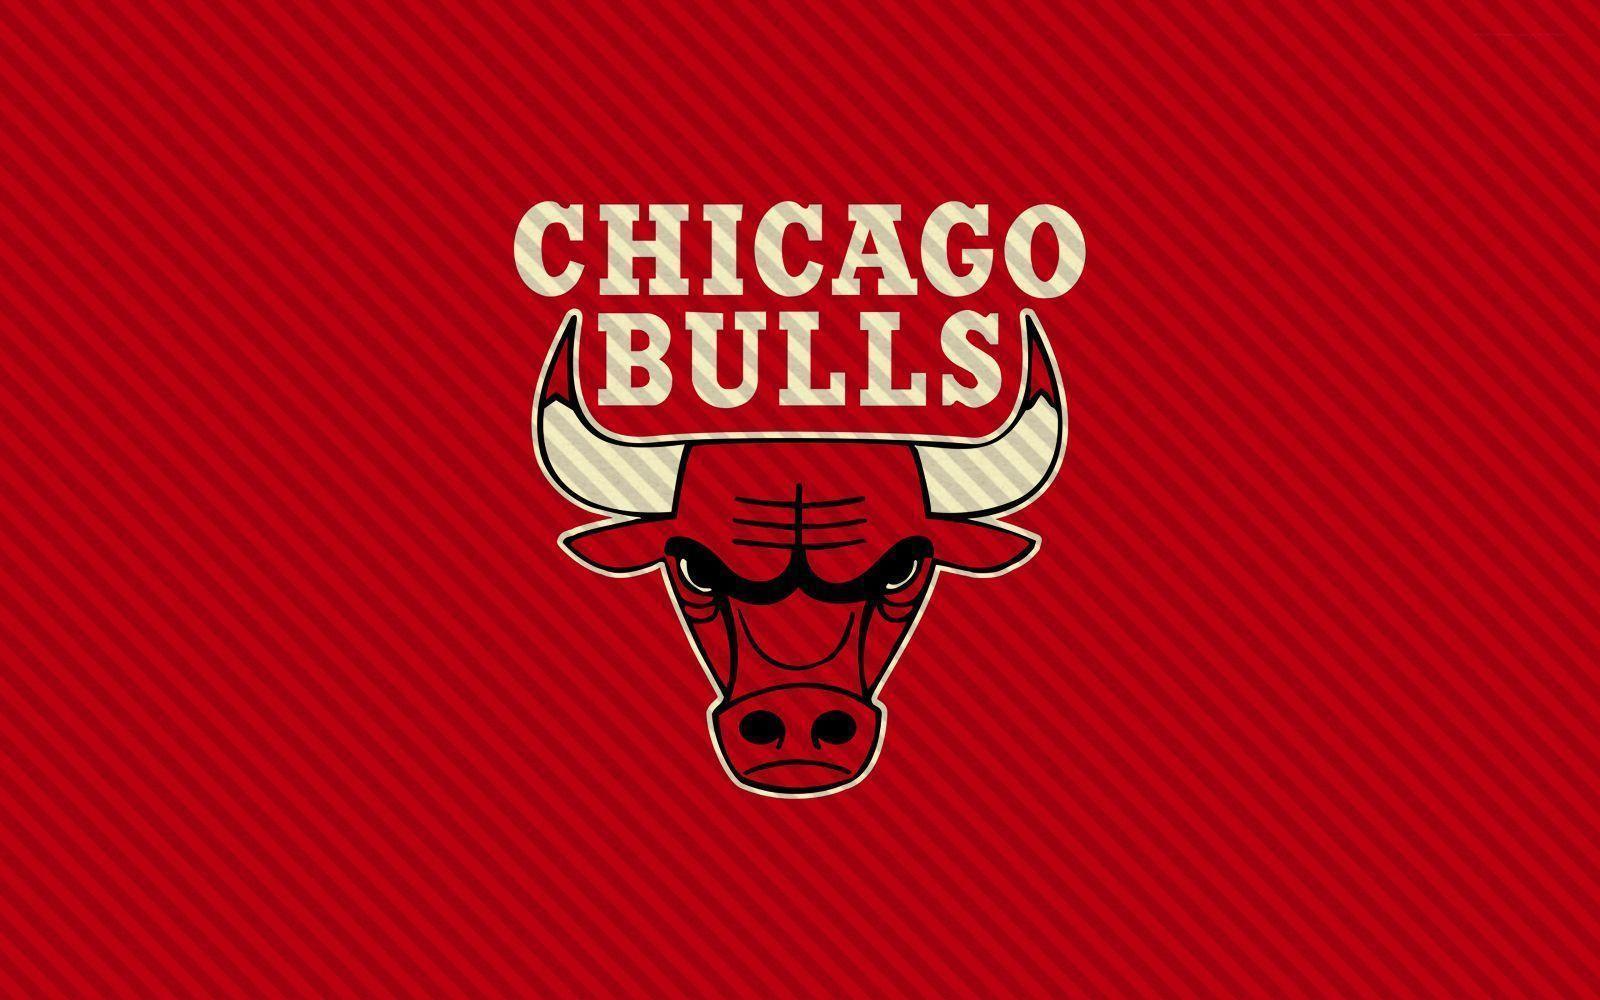 Bulls wallpaper